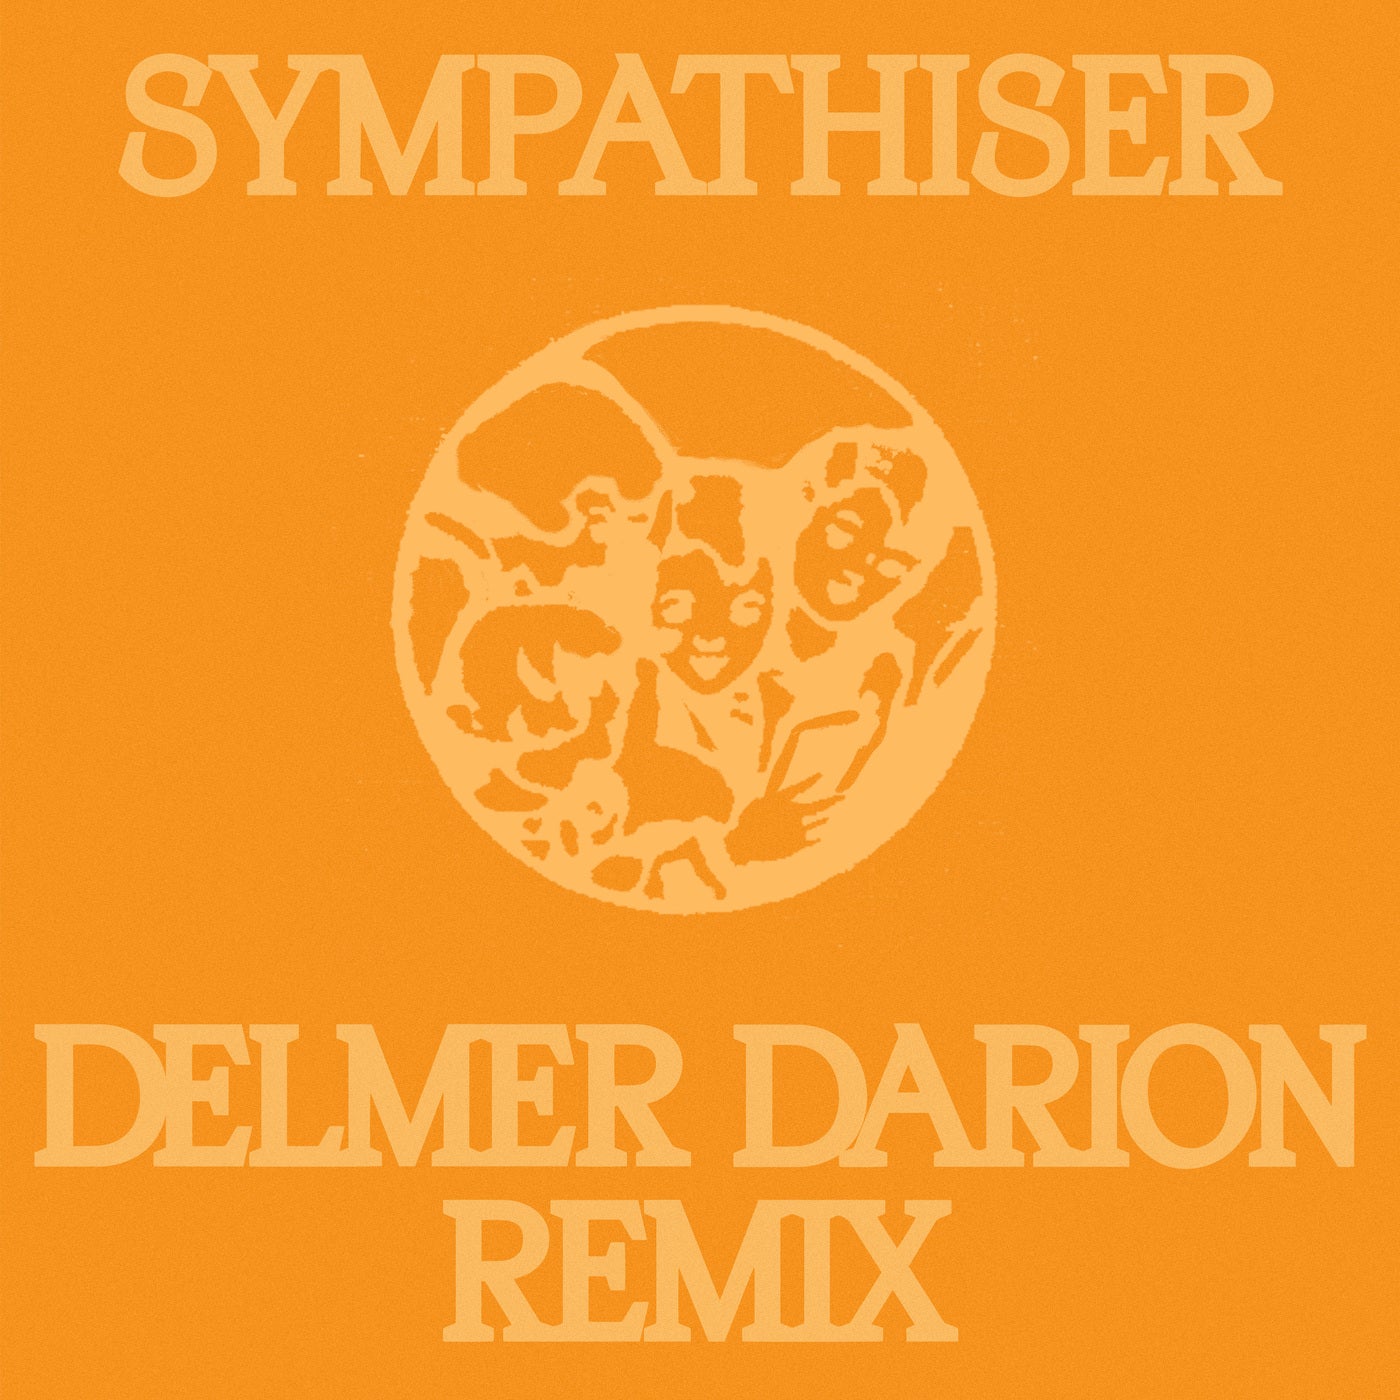 Sympathiser (Delmer Darion Remix)